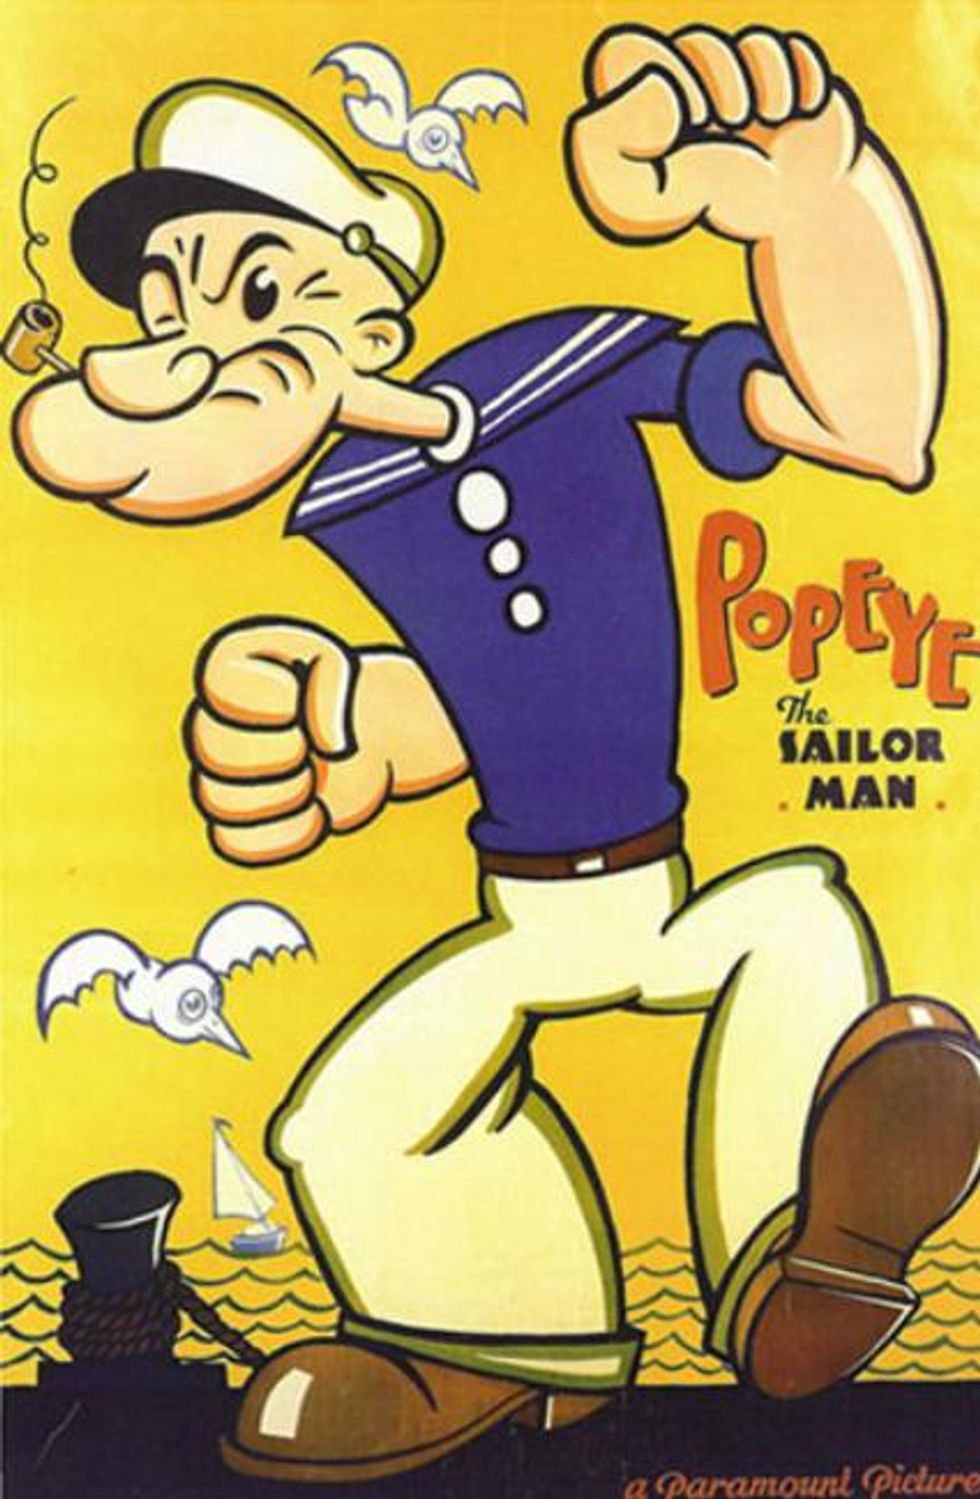 Popeye (1929, 1980)